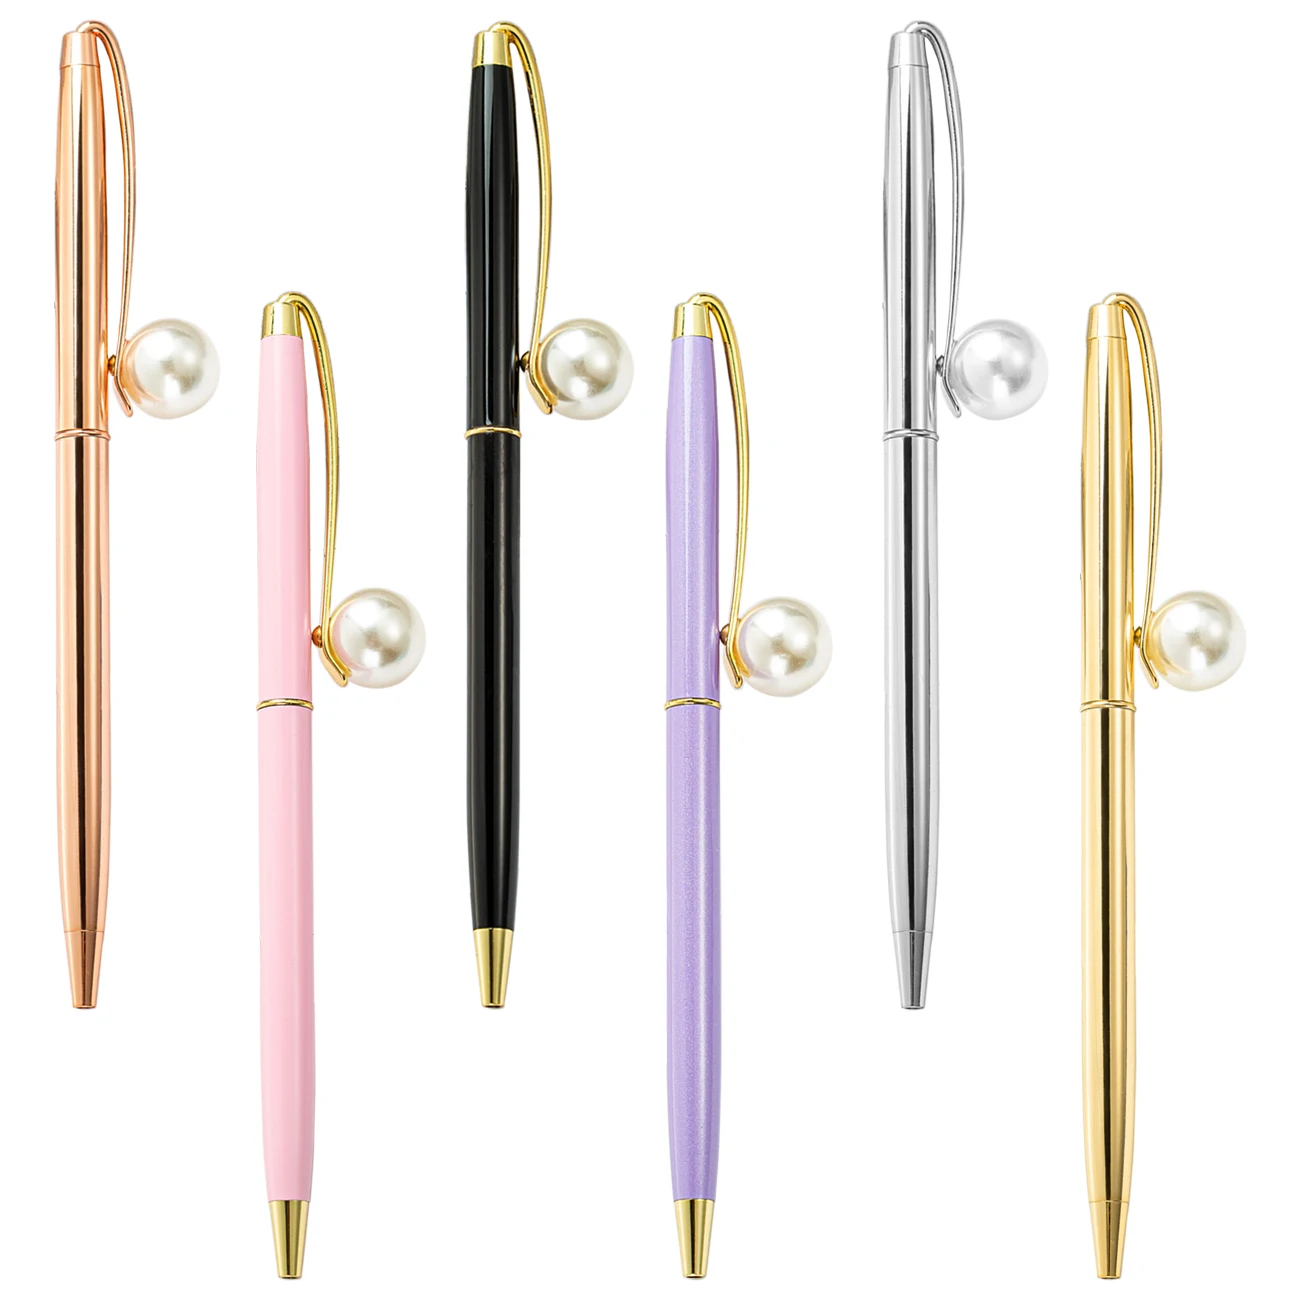 20pcs/lot Novelty gift office ball pen promotion Corporate Ball Point Pen Custom logo Mechanism Jewel Pearl Cool Pens